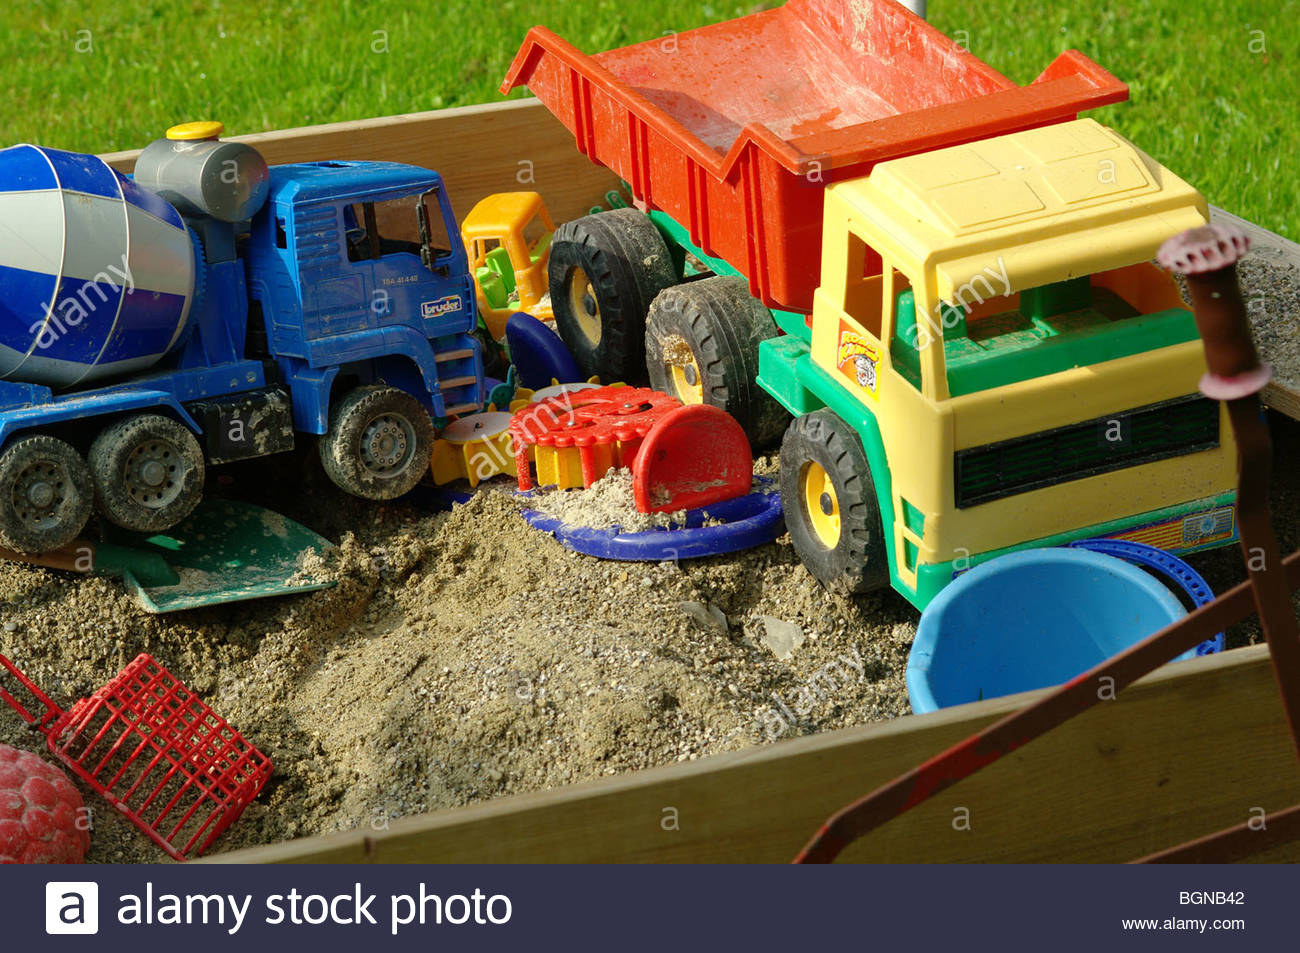 sandpit trucks